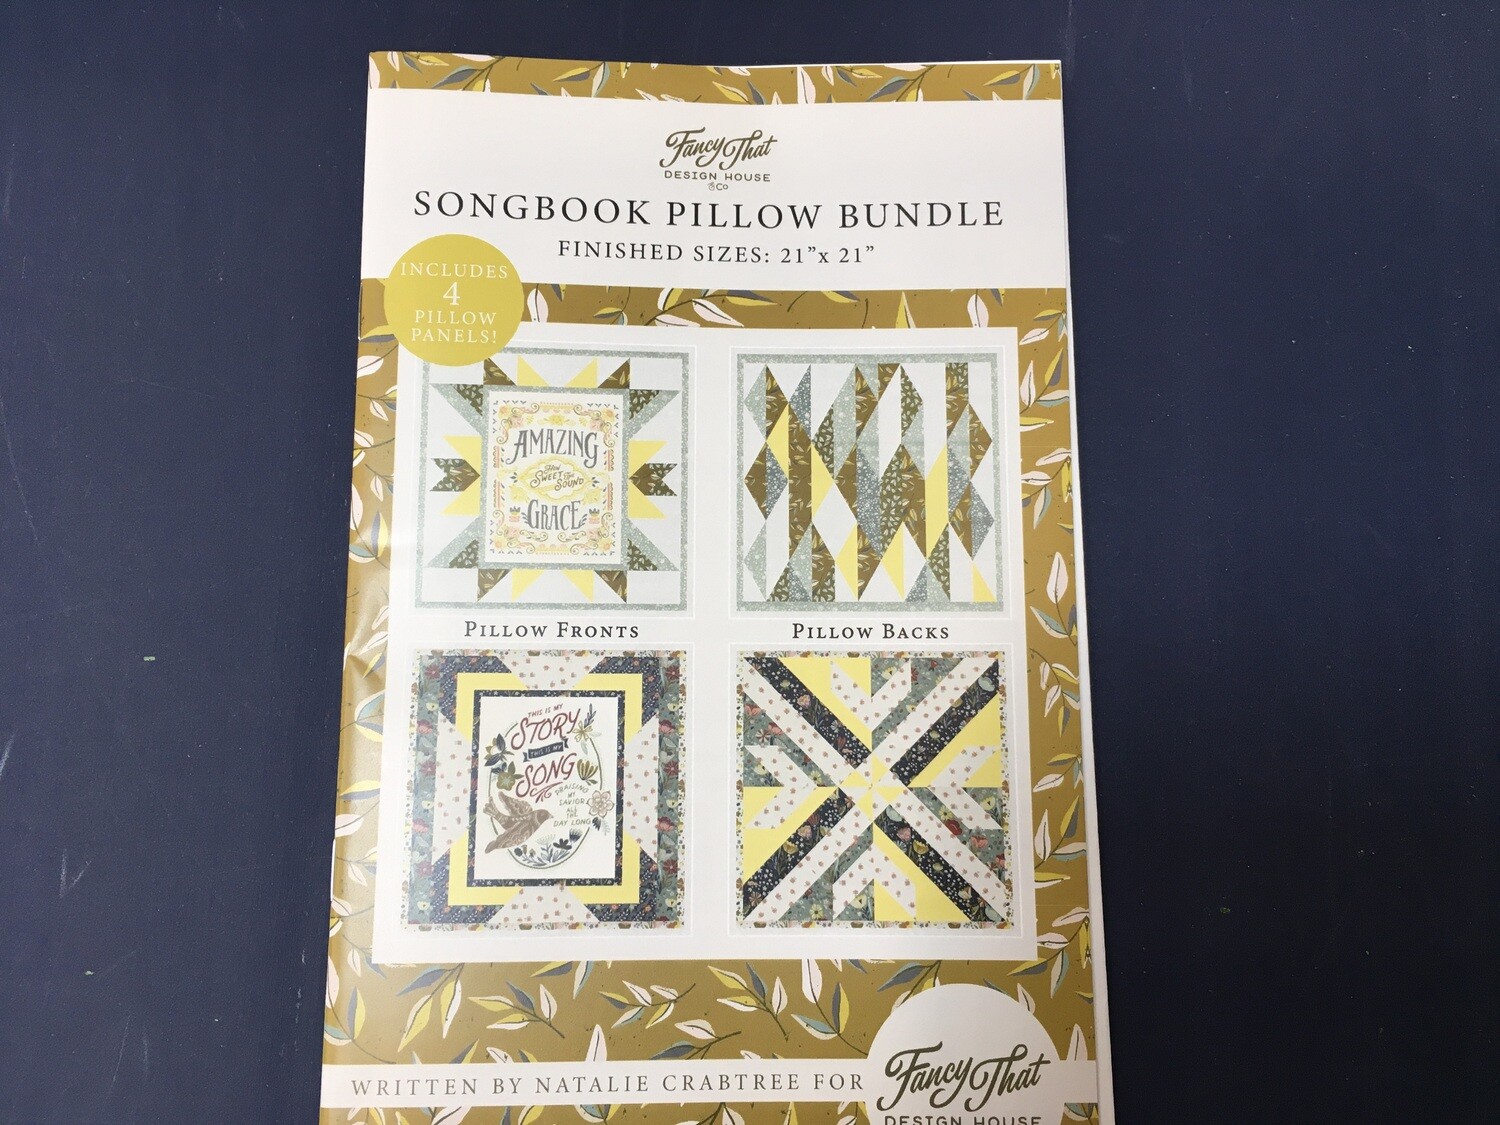 Songbook pillow bundle pattern